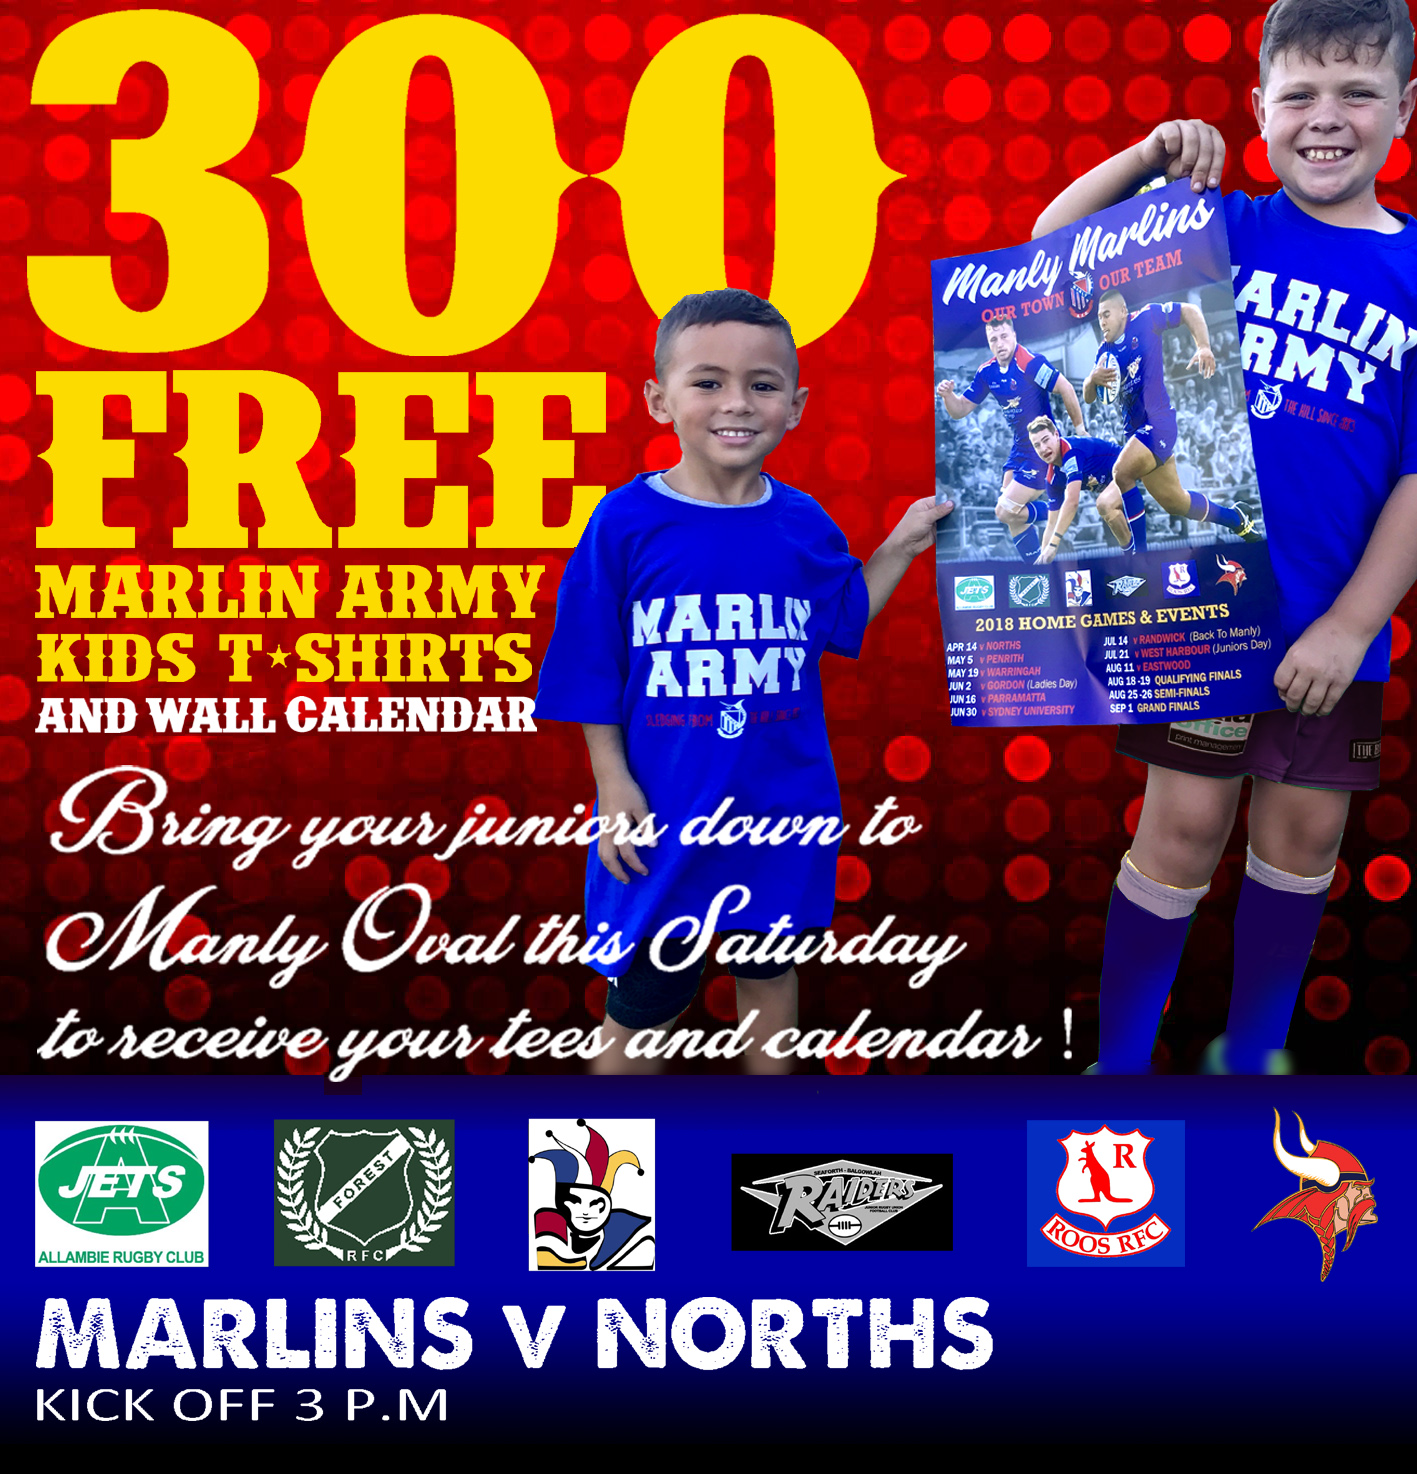 Marlins Army Kids Tee Give Away.jpg